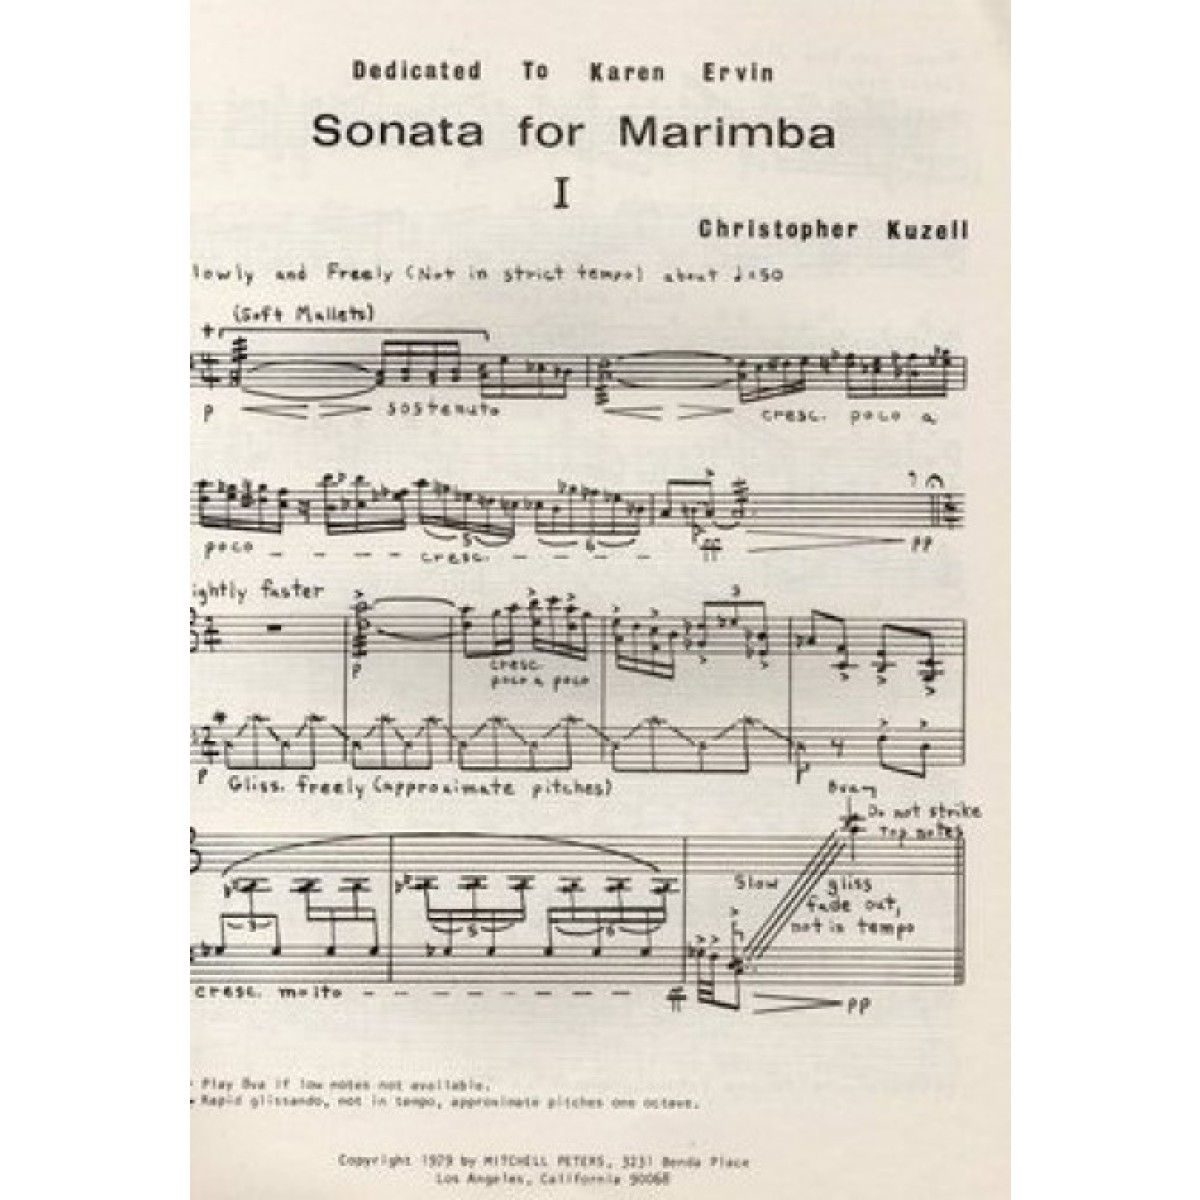 Sonata For Marimba by Christopher Kuzell